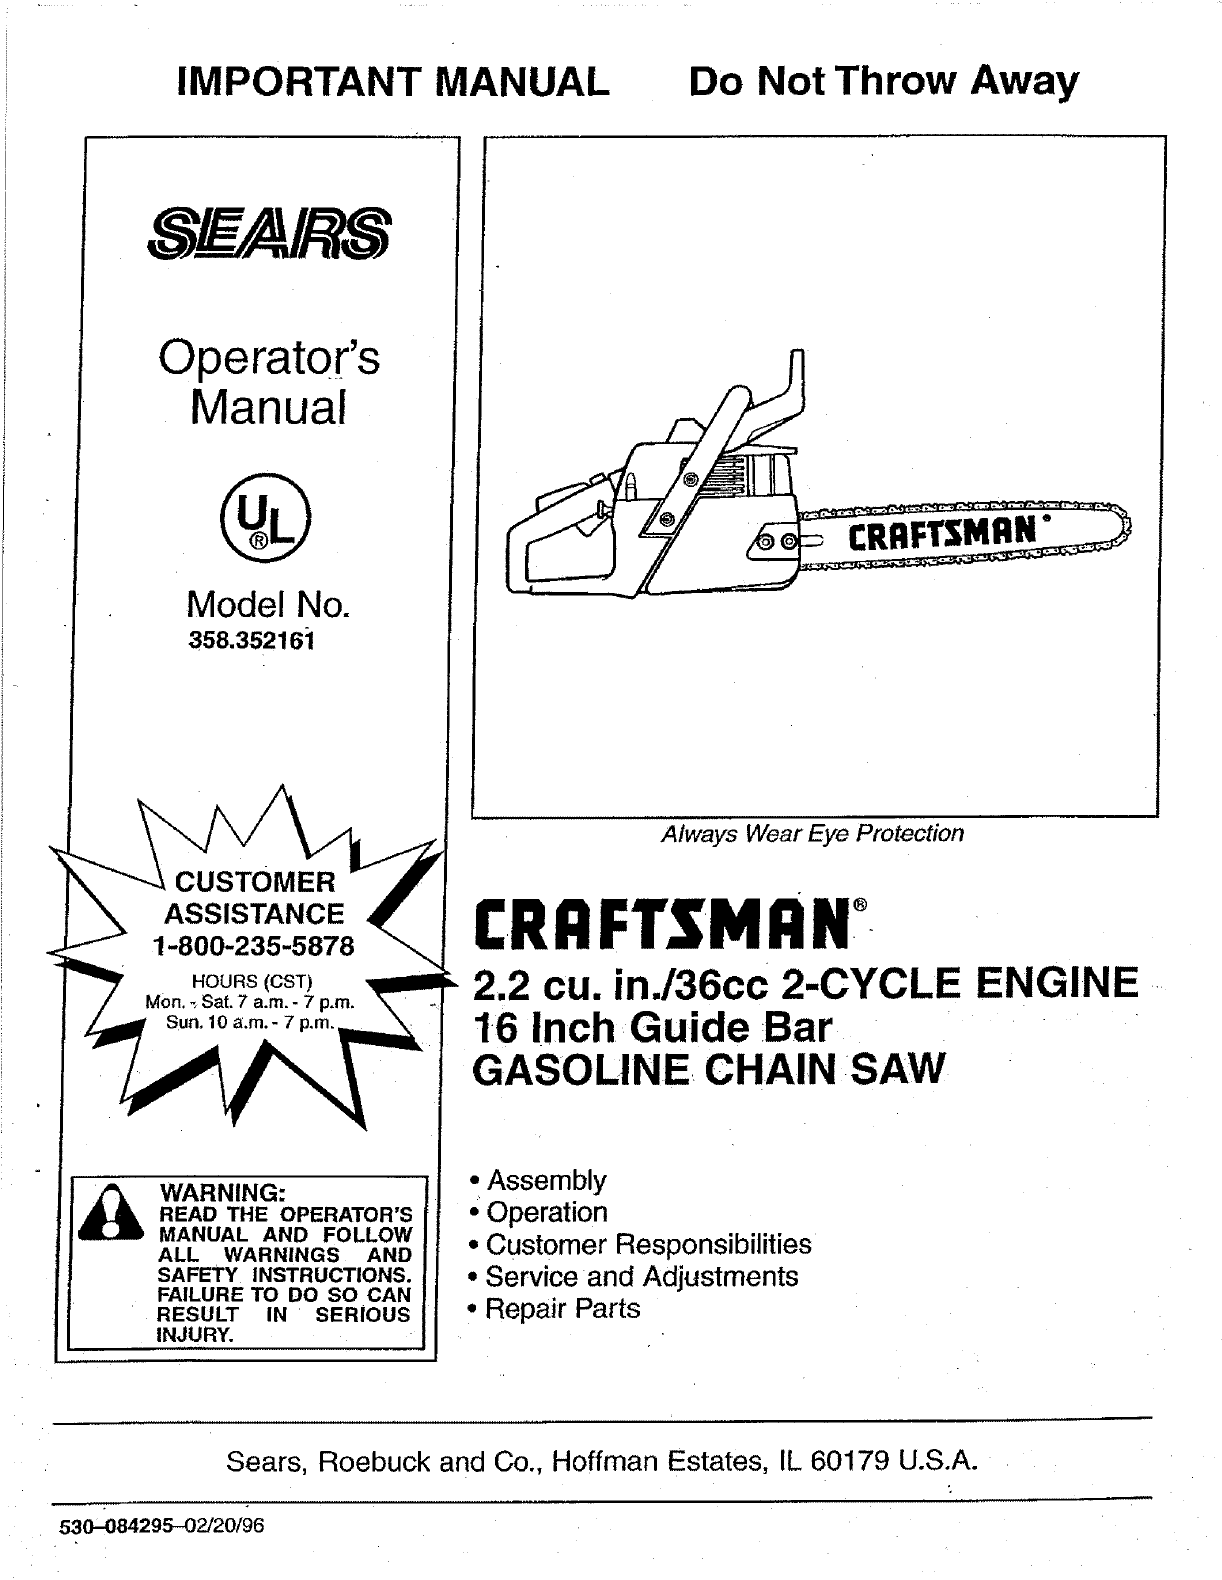 Carburetor Air Filter Kit Fits For Craftsman 2.2cu inch 16"bar chainsaw saw Carb 